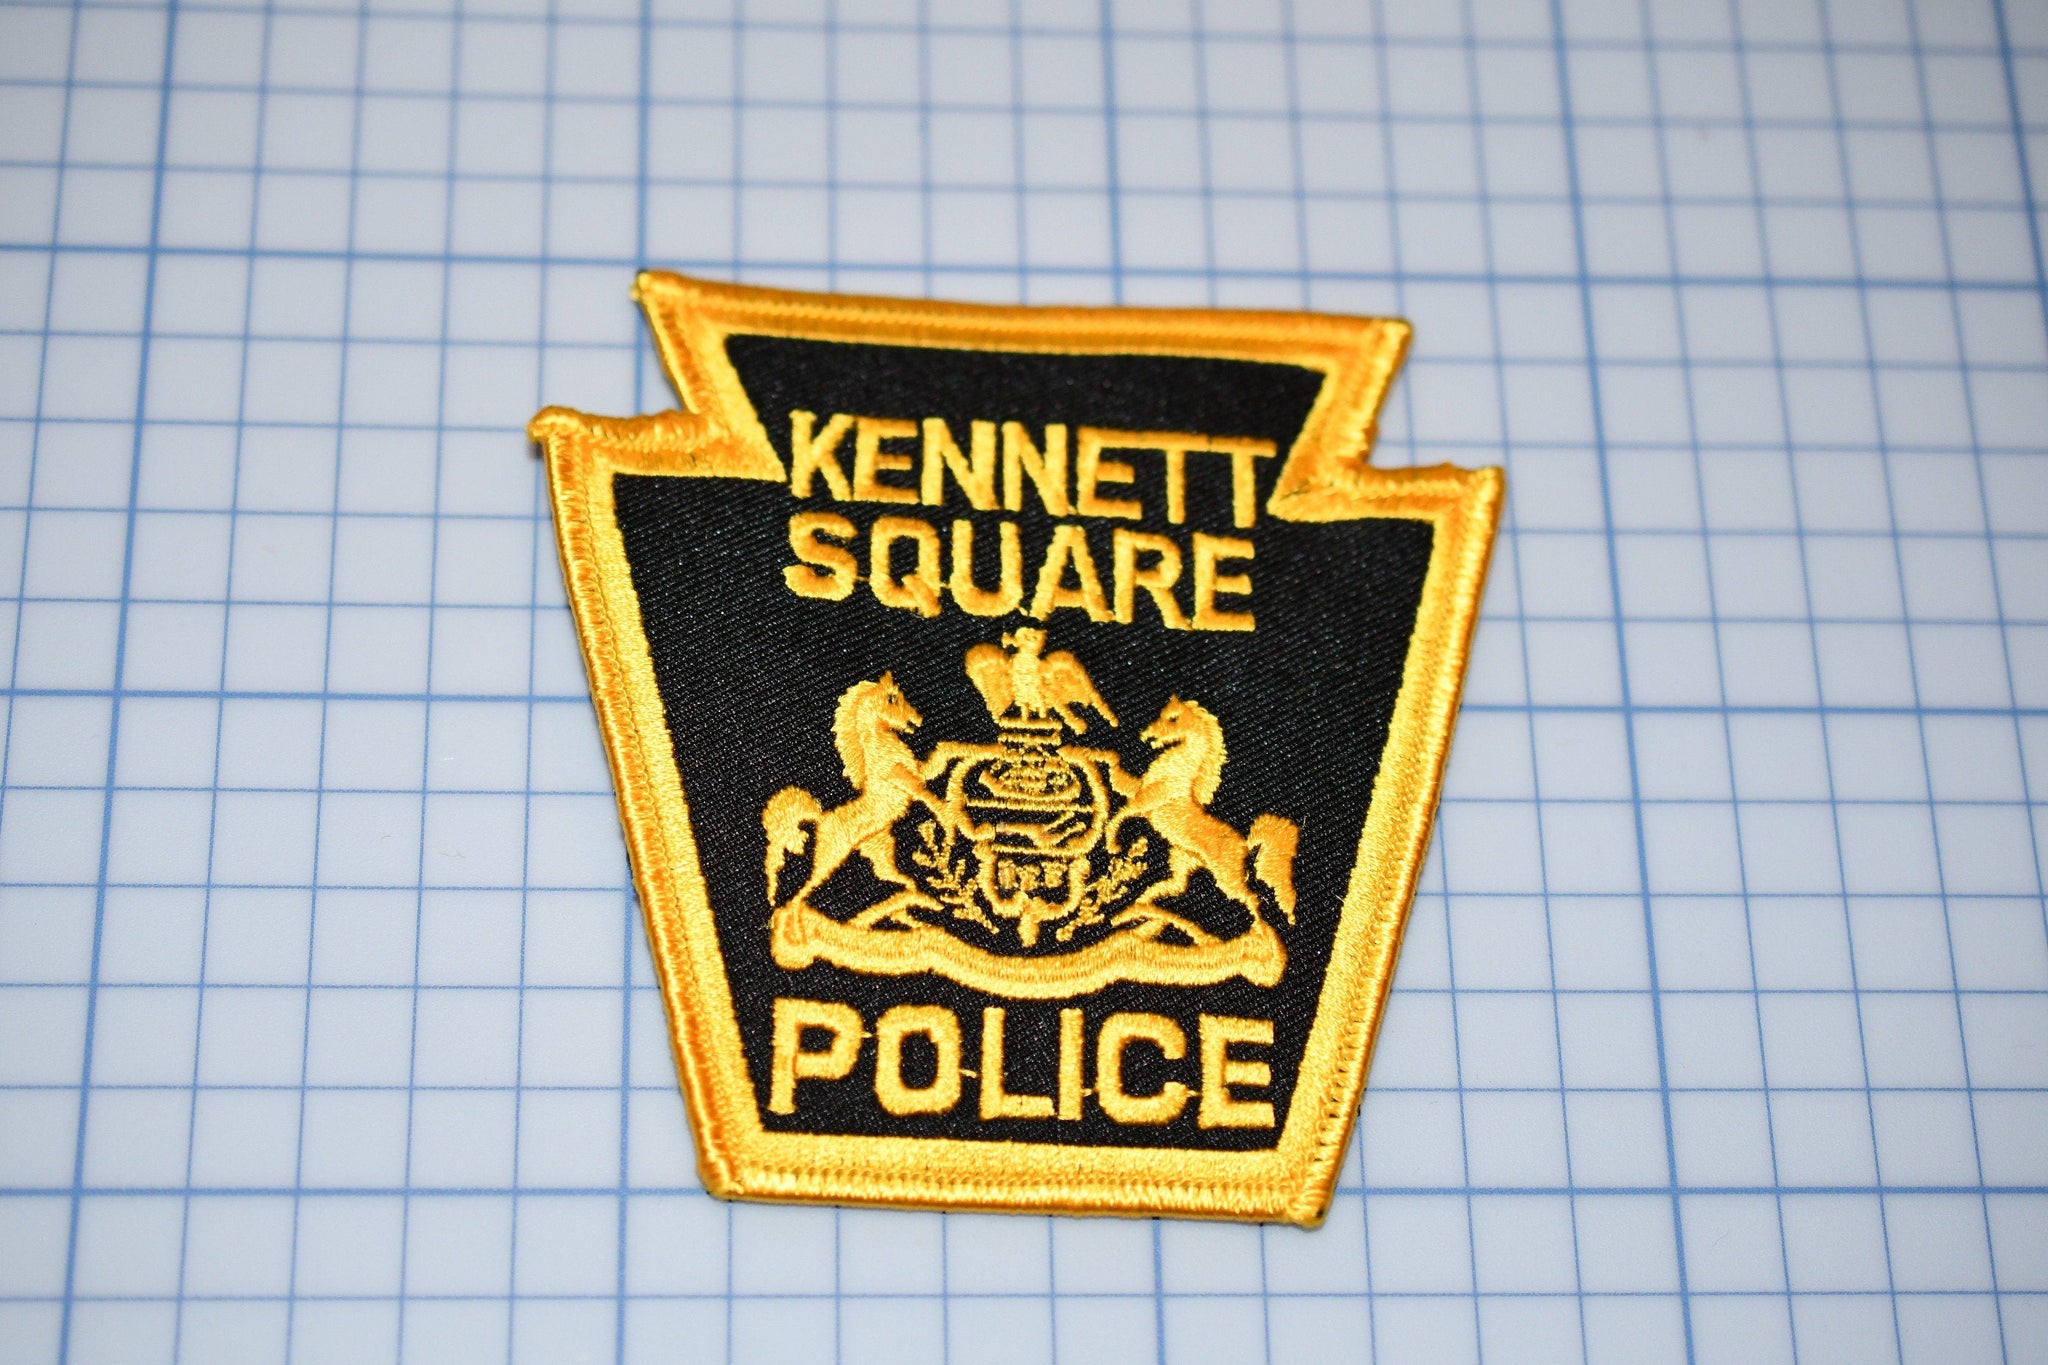 Kennett Square Pennsylvania Police Patch (B23-169)